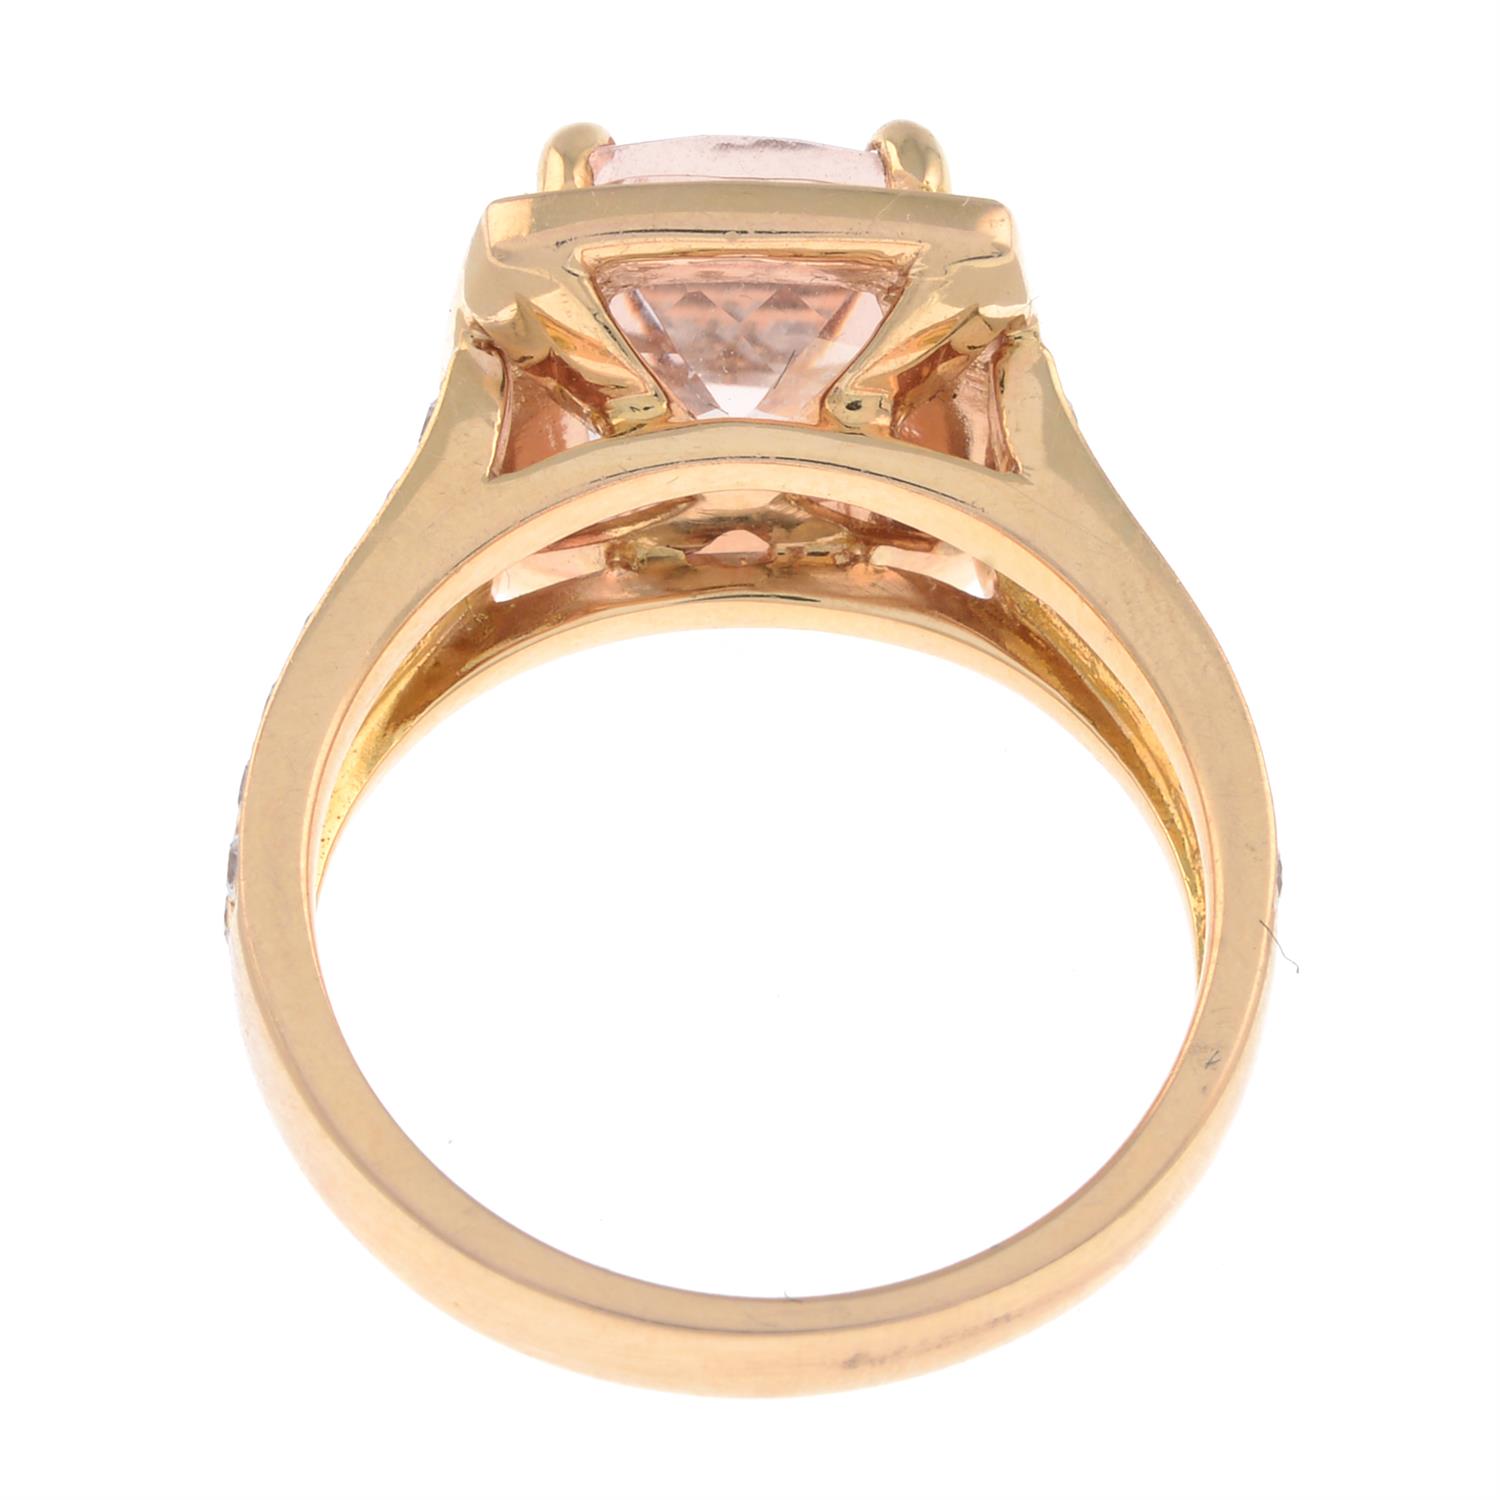 18ct gold morganite and diamond ring - Image 2 of 4